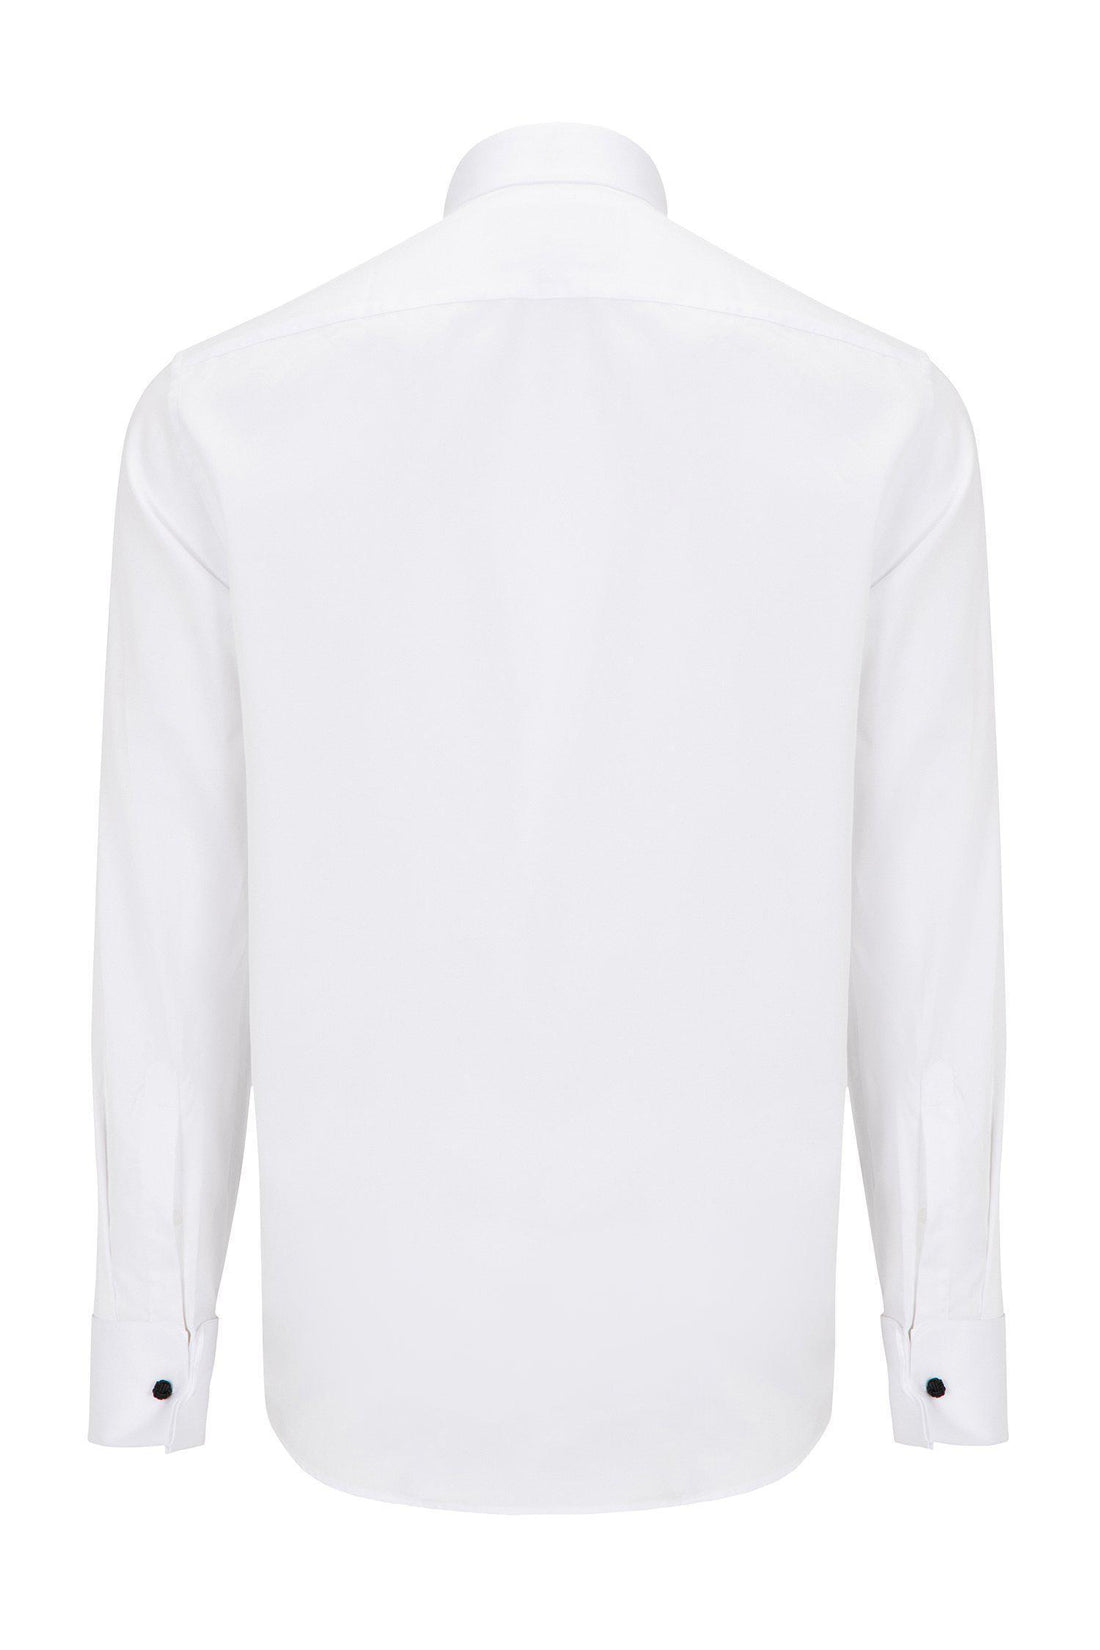 Lurex Paneled Spread Collar Shirt - WHITE GREY - Ron Tomson